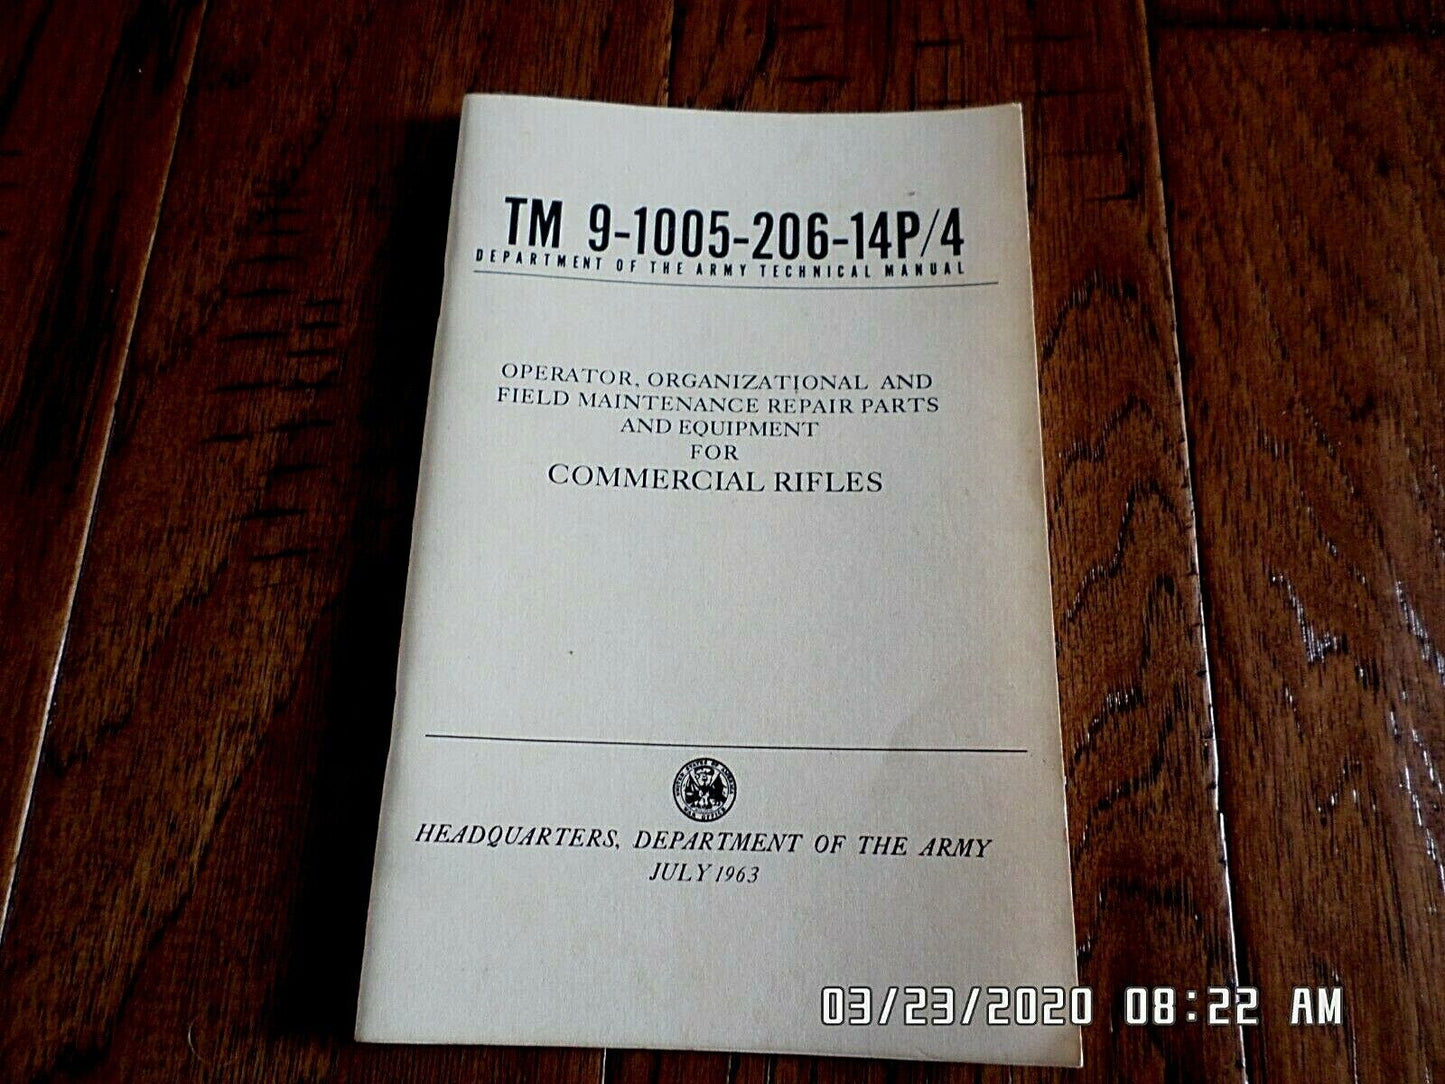 U.S ARMY TM 9-1005-206-14 P/4 COMMERCIAL RIFLES MAINTENANCE REPAIRS HANDBOOK